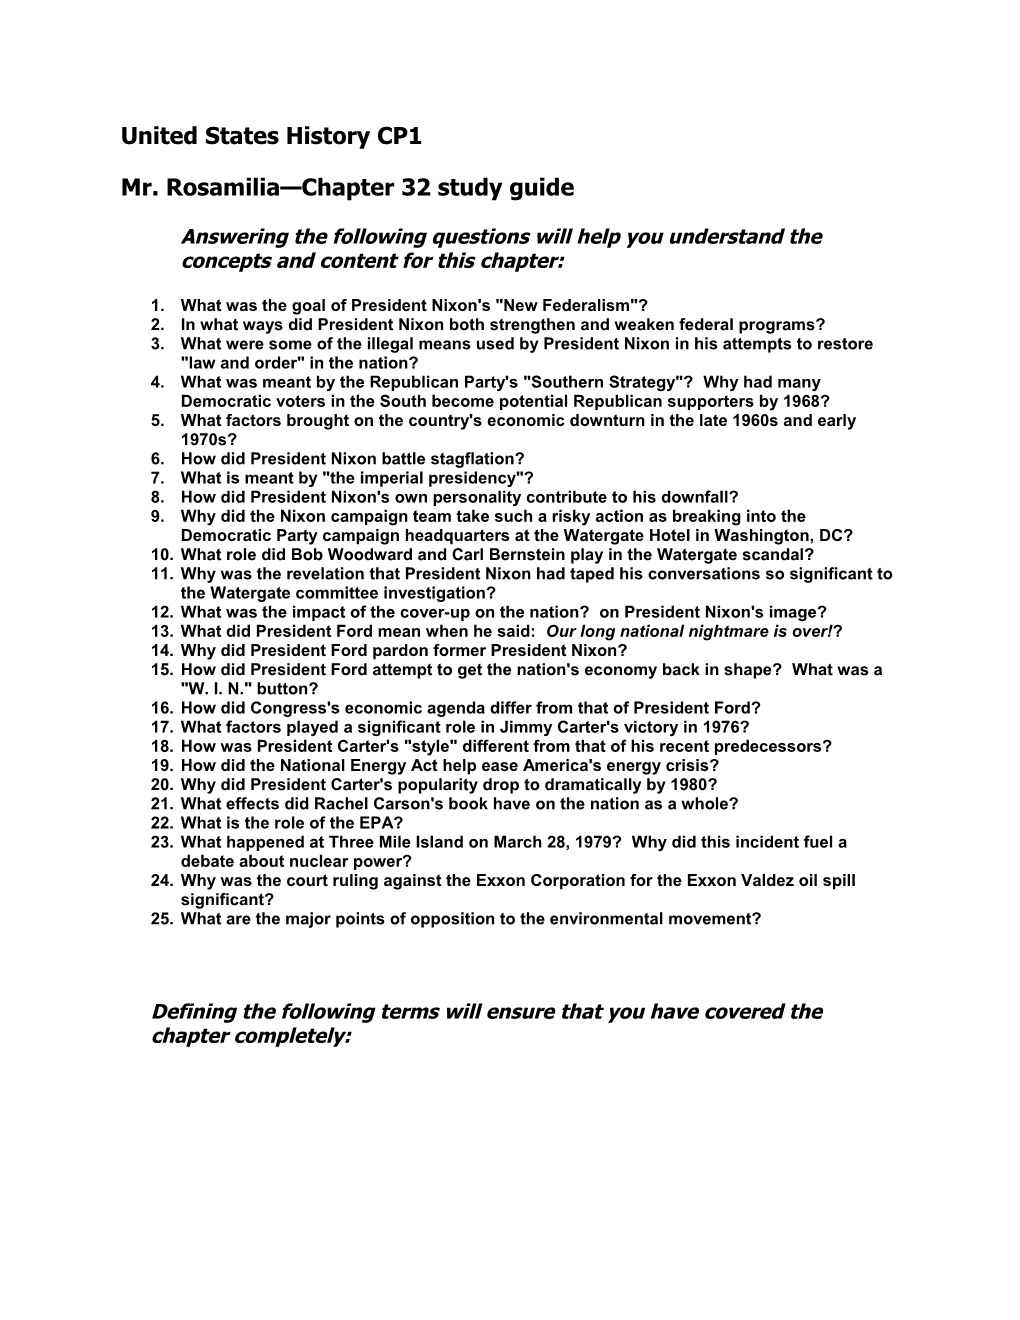 Mr. Rosamilia Chapter 32 Study Guide